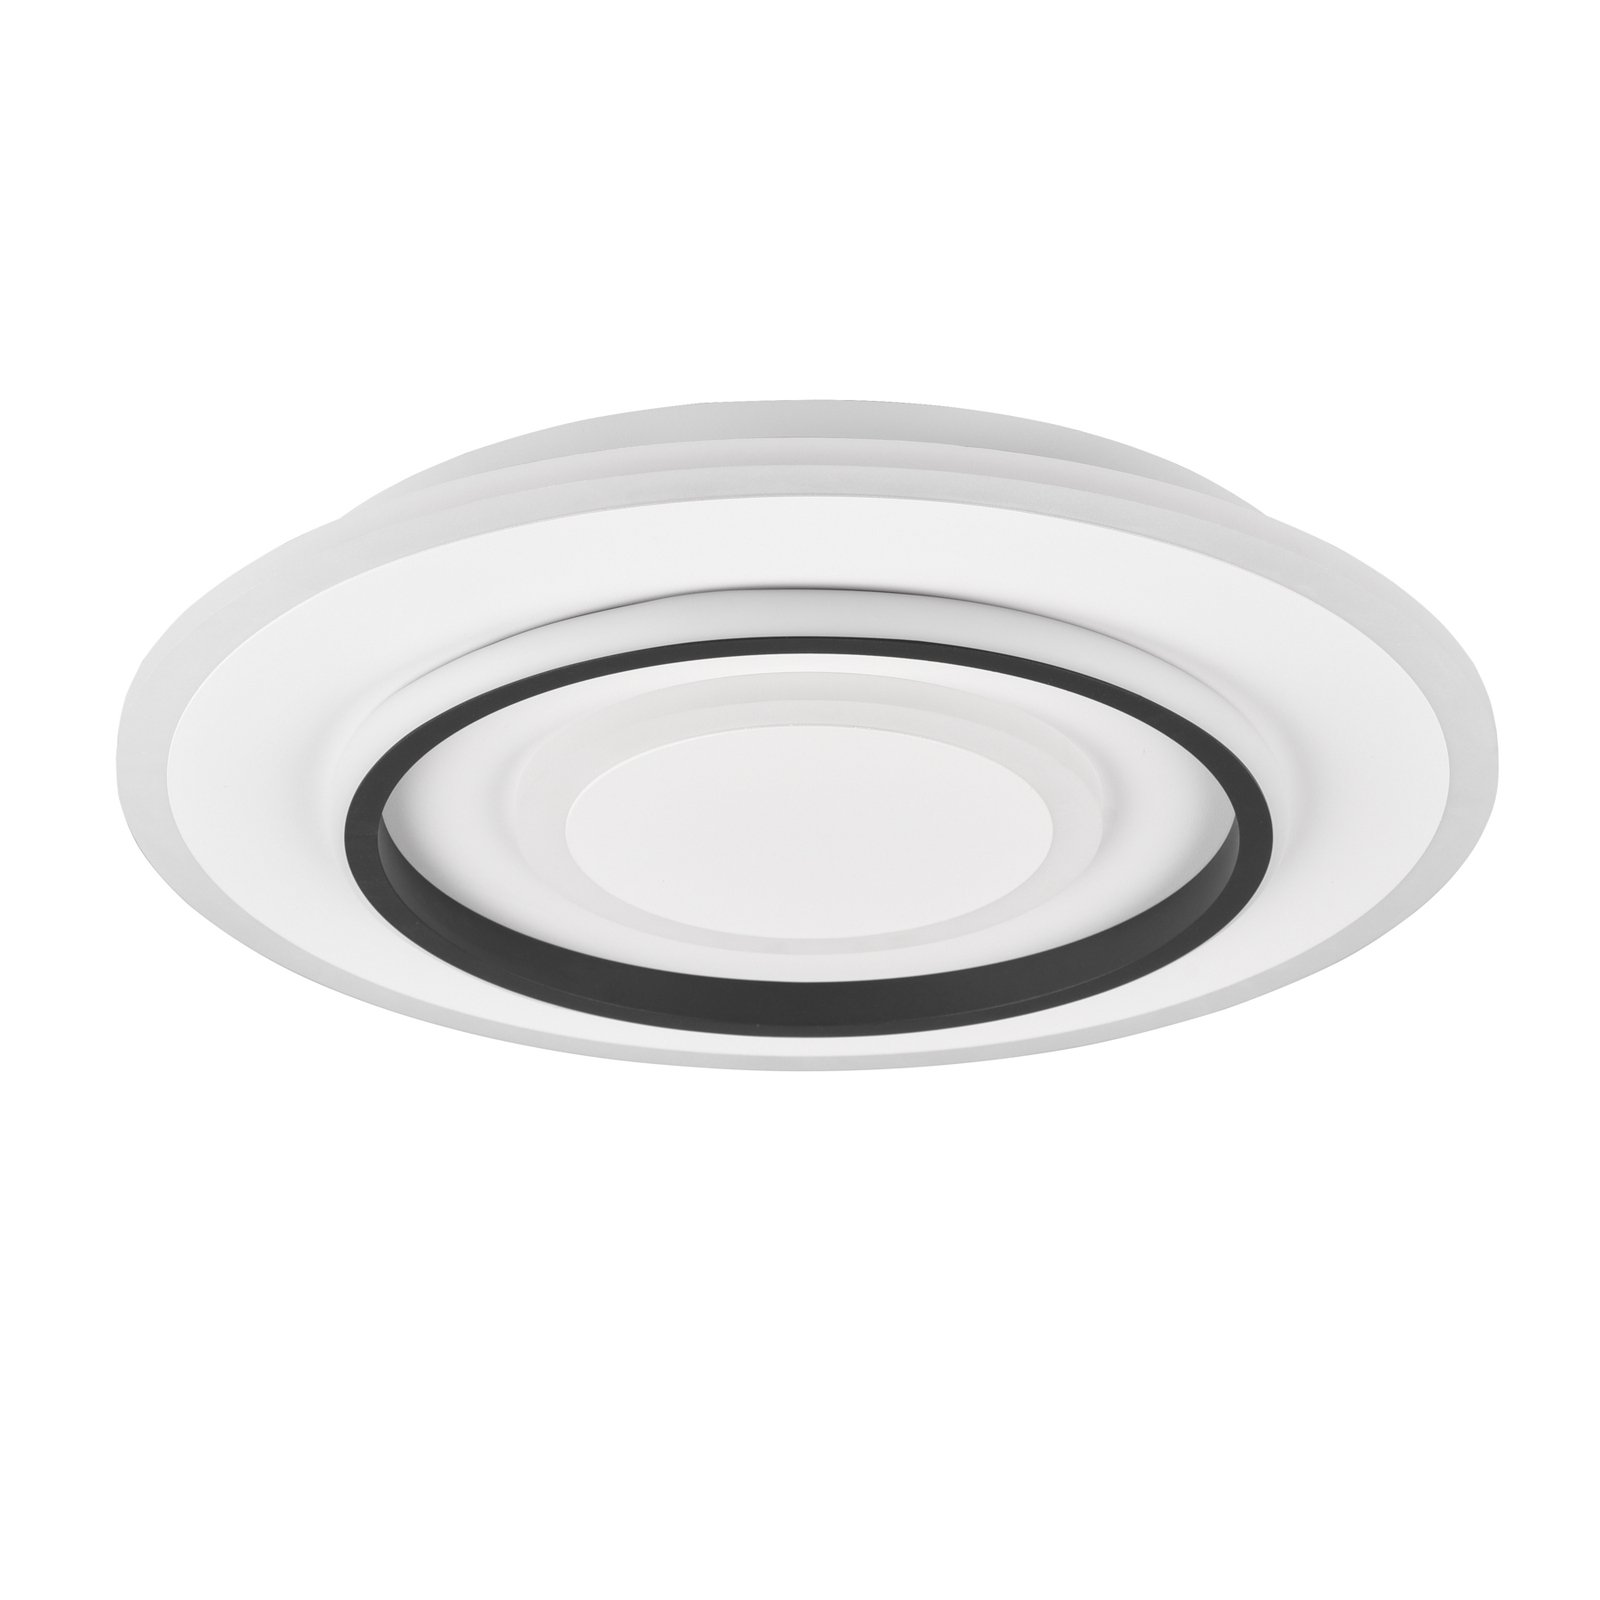 LED ceiling lamp Jora round remote control, Ø 41 cm